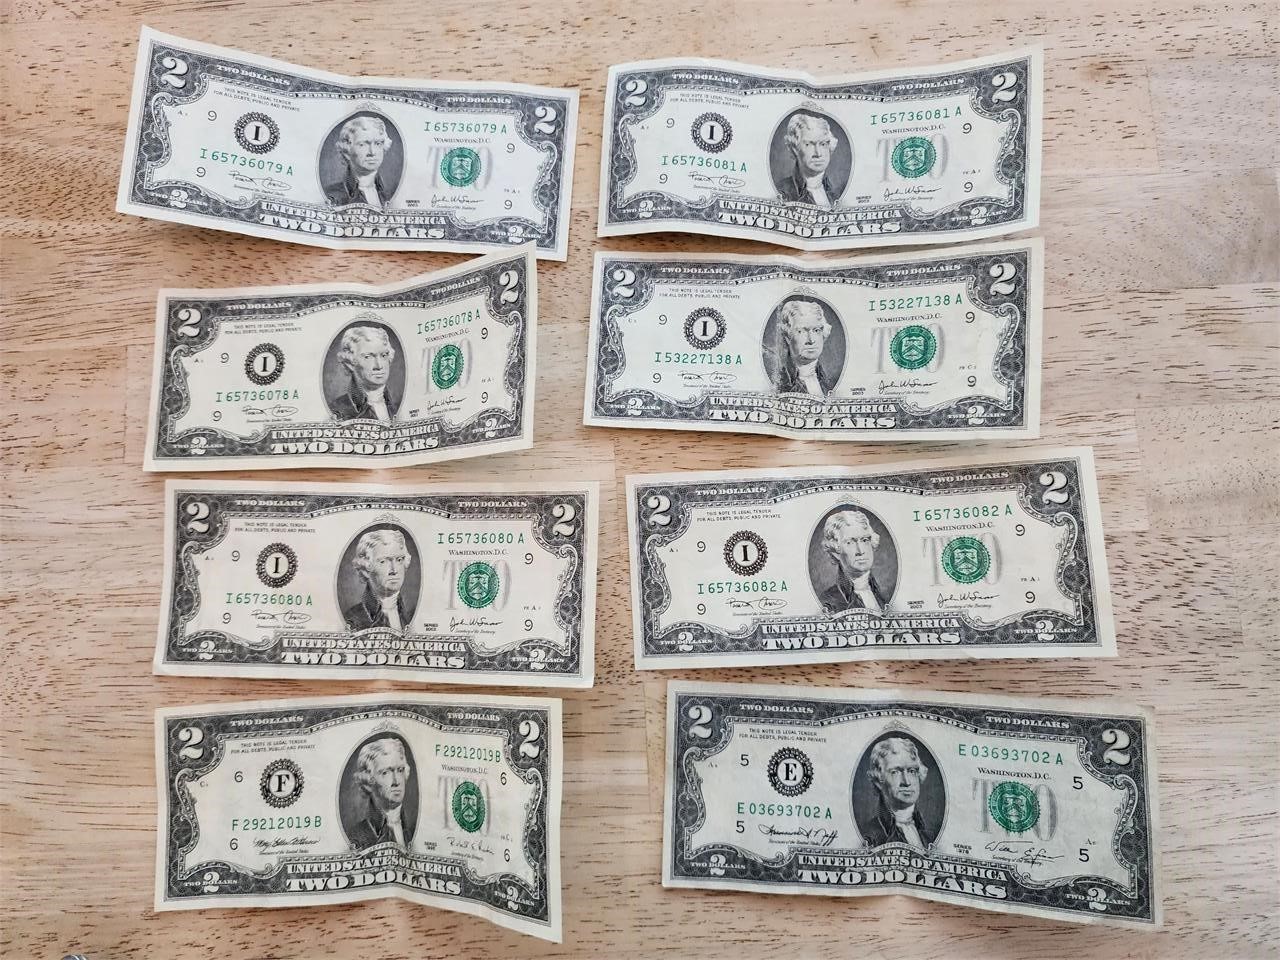 8 Two dollar bills